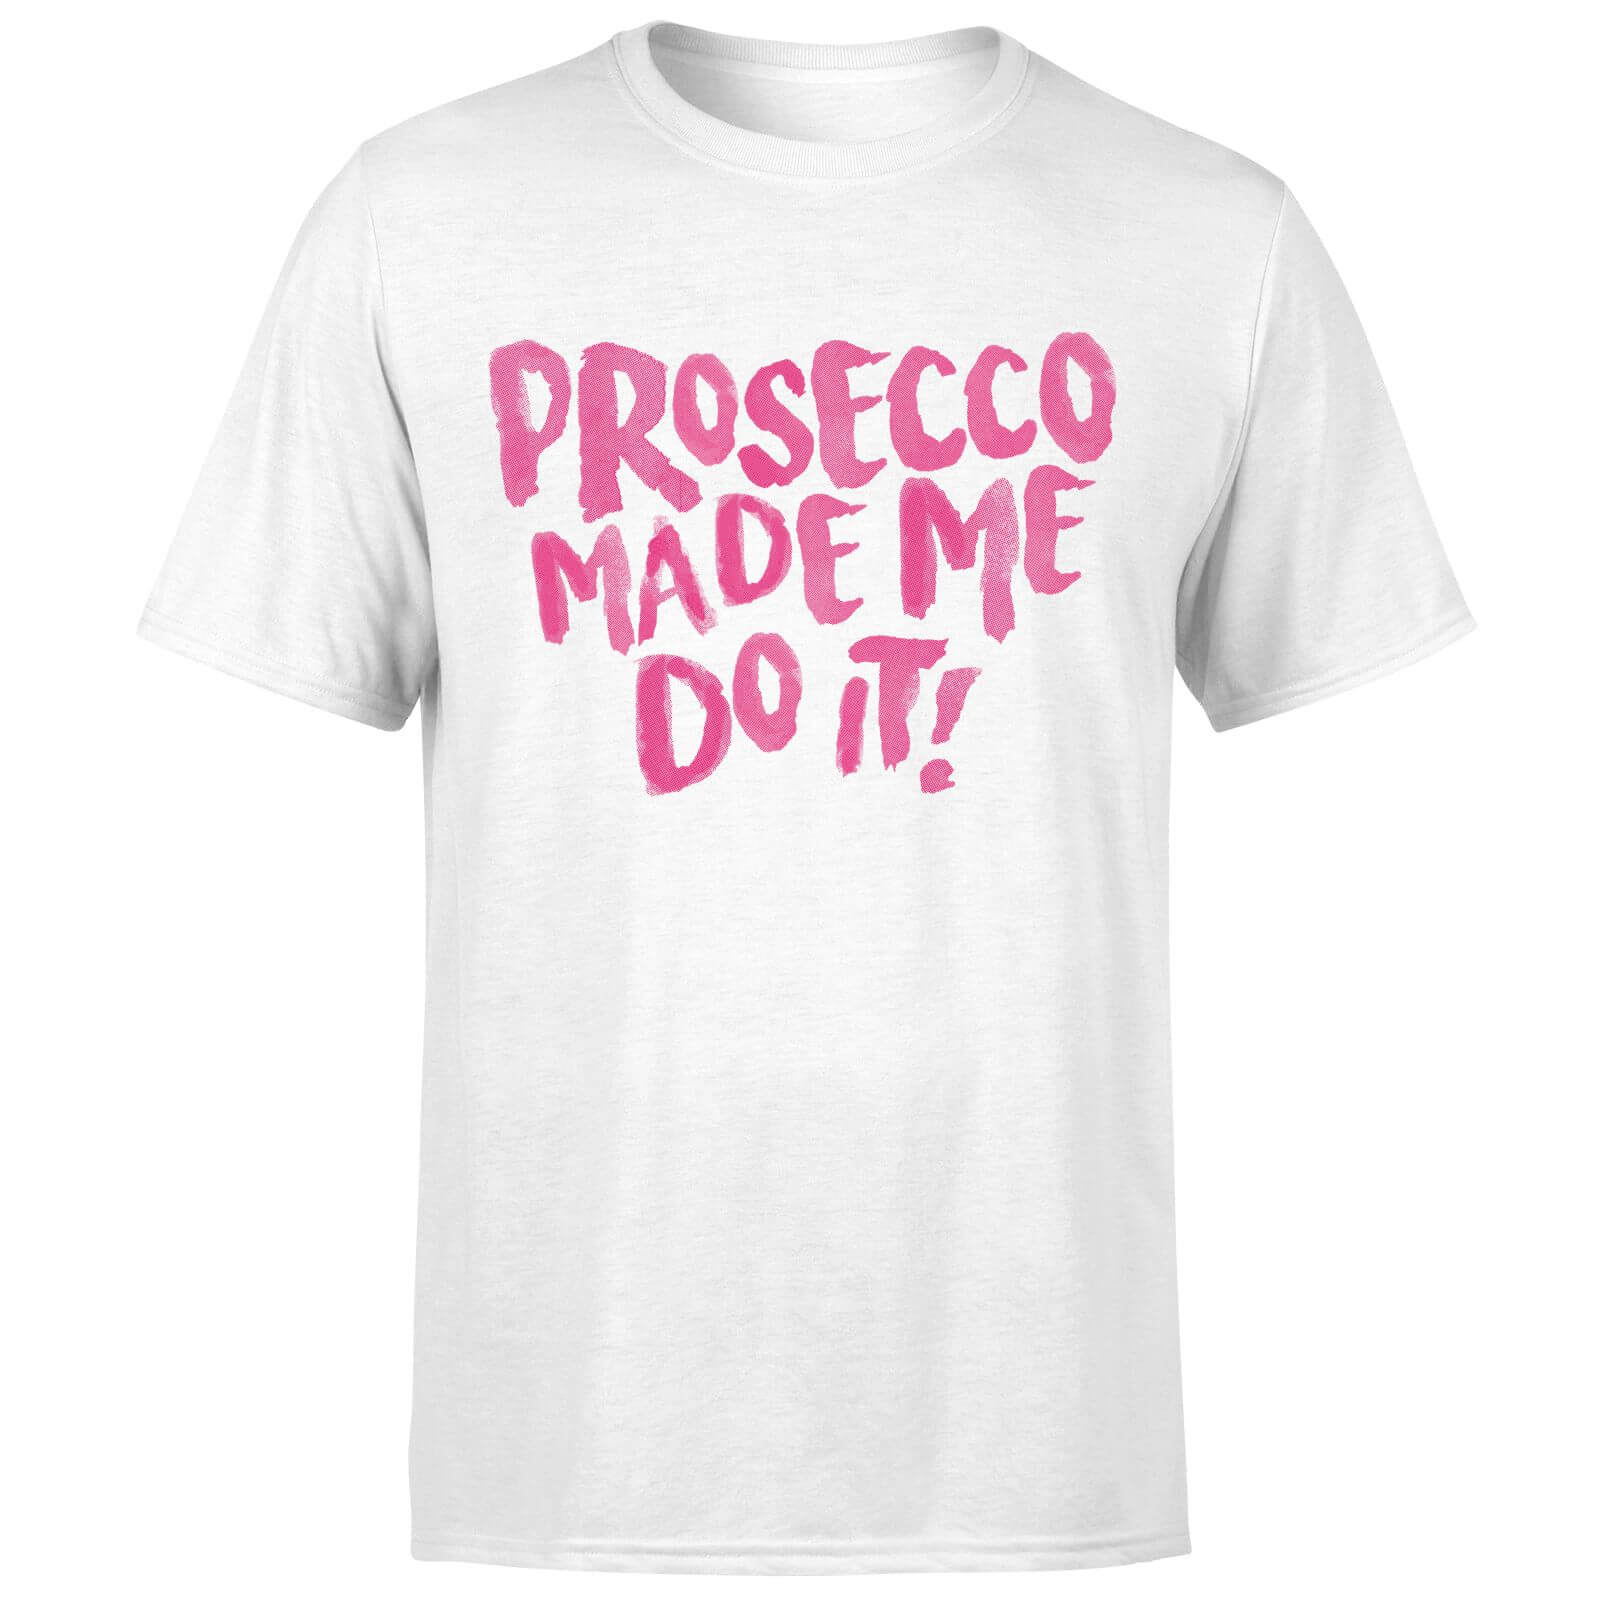 Prosecco Made Me Do it T-Shirt - White - M - White